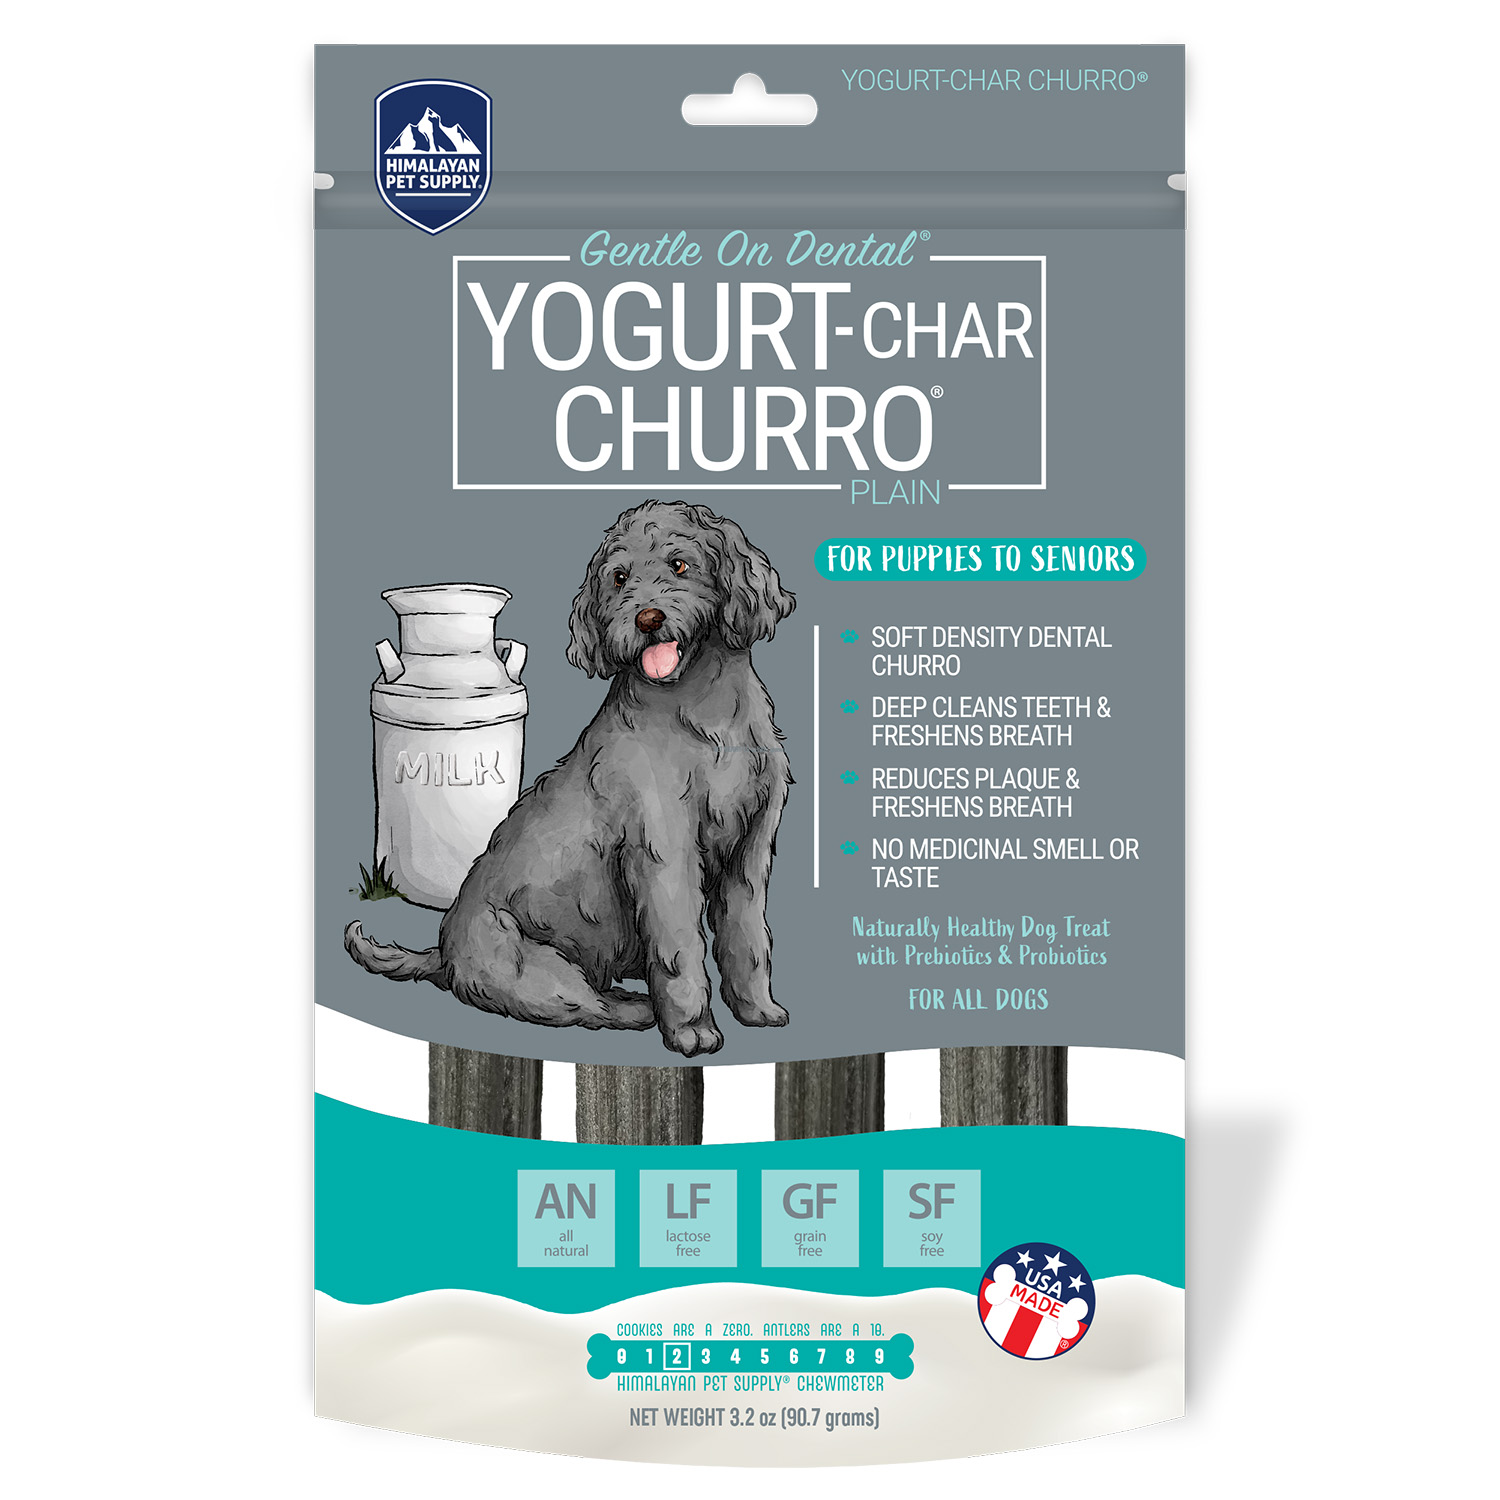 Churro Yogurt-Char